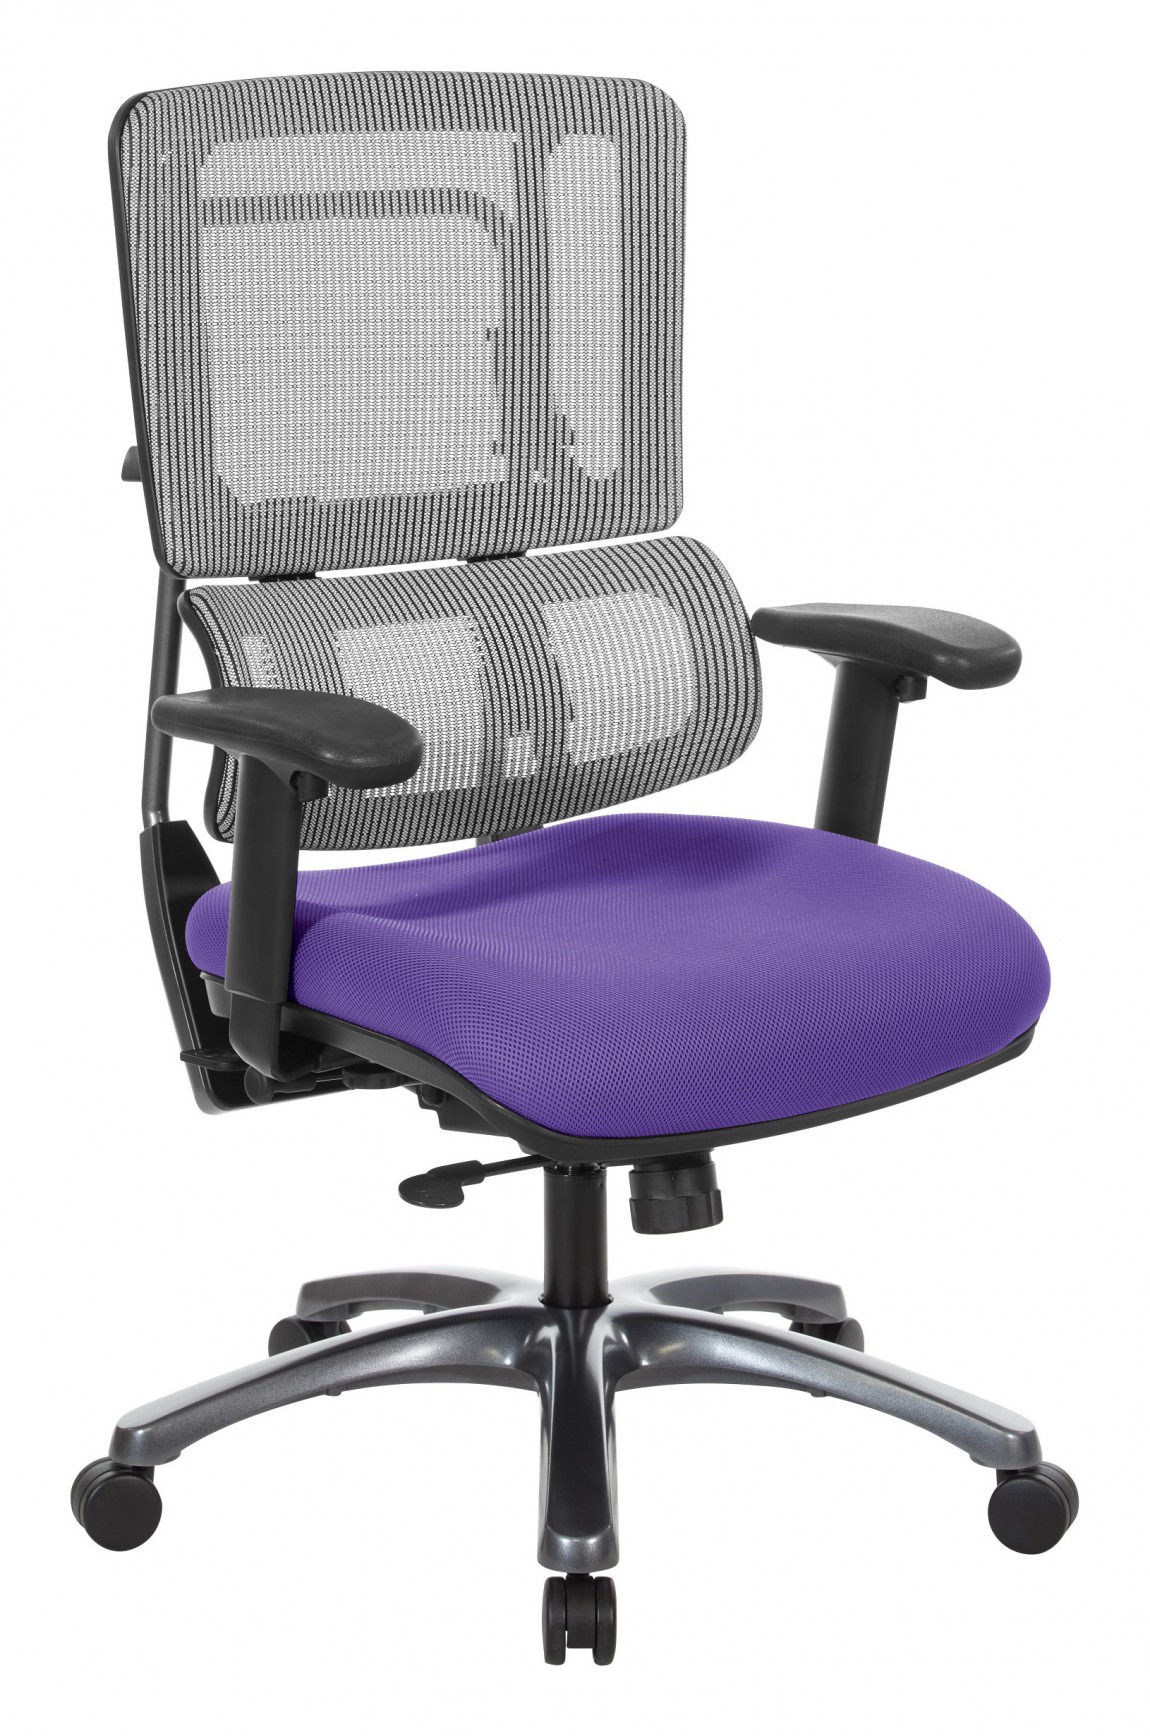 Adjustable Height Task Chair